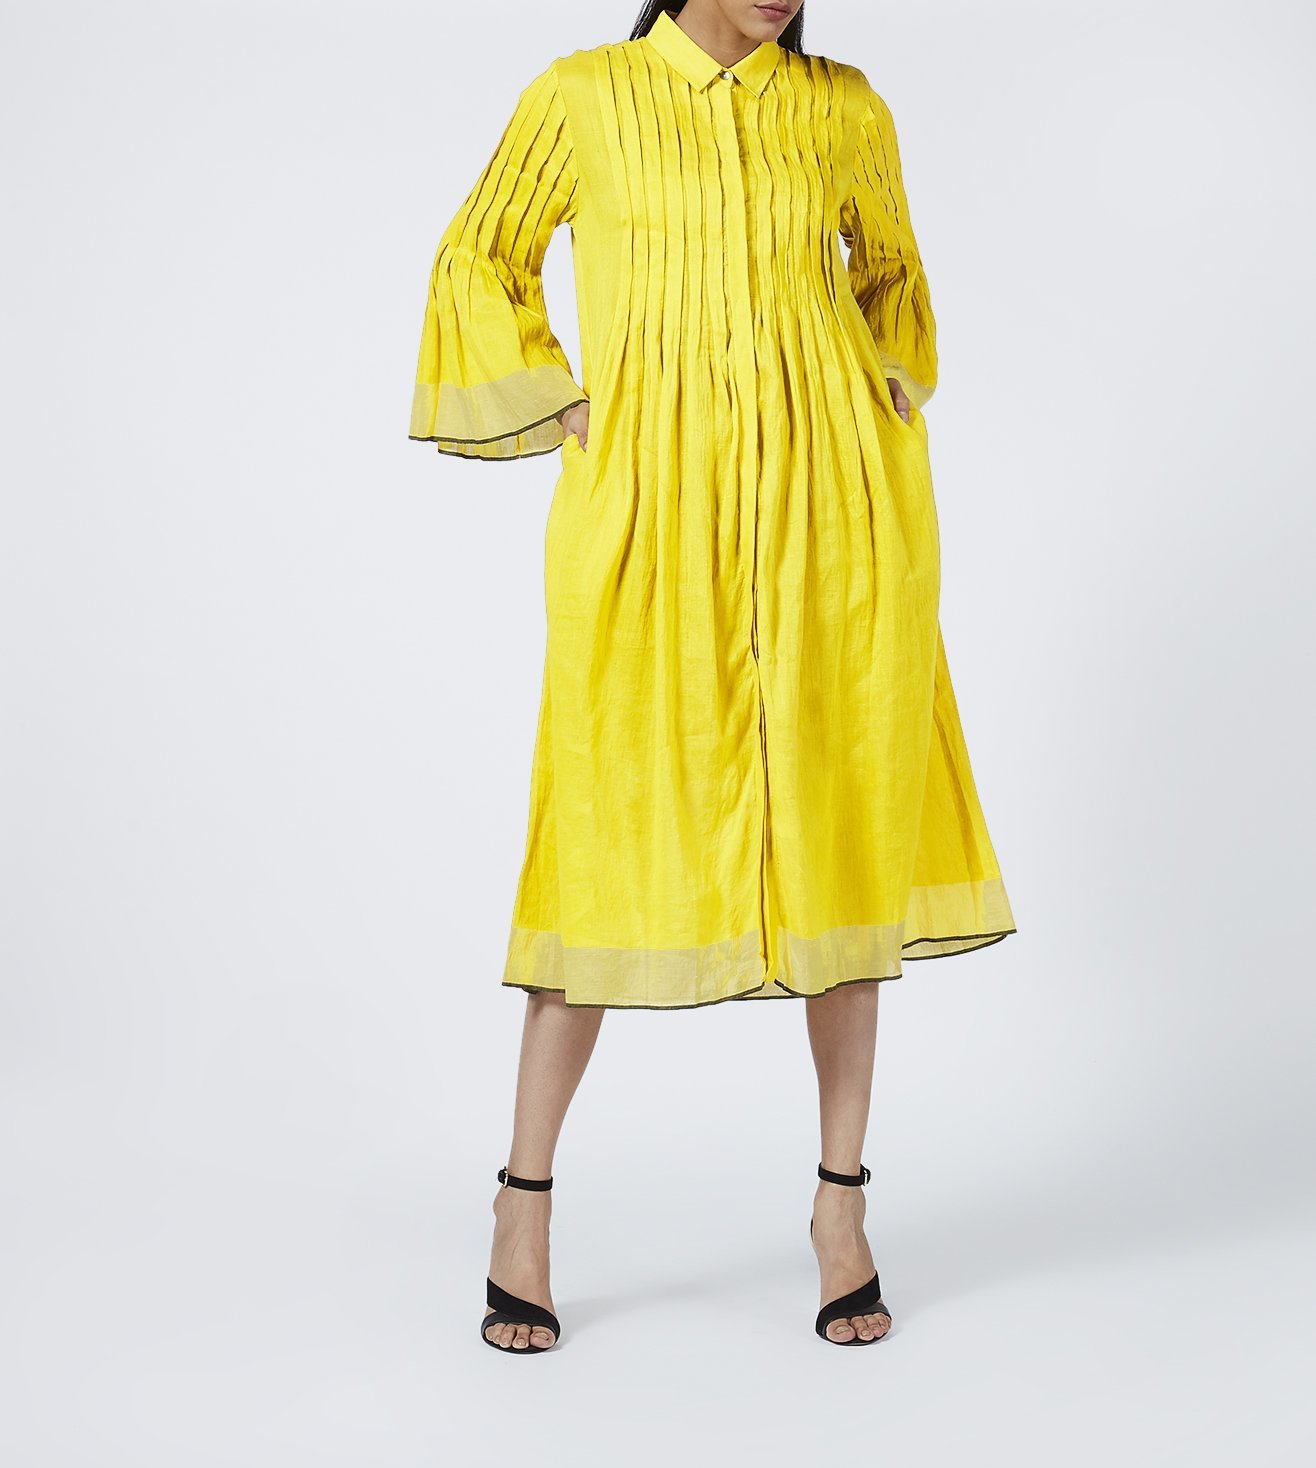 yellow collared dress